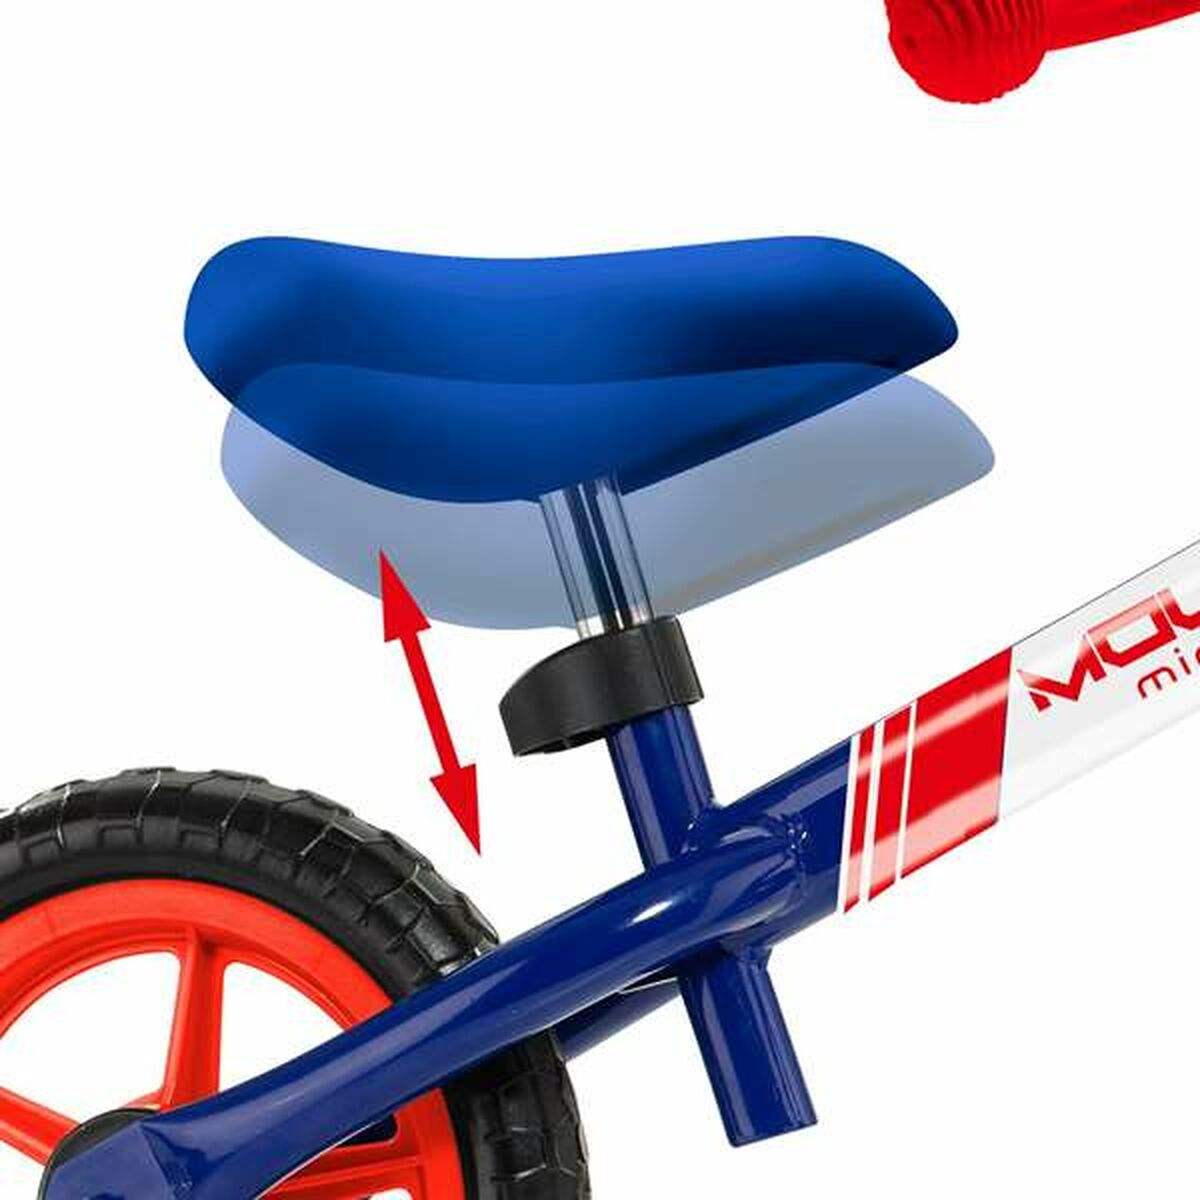 Bicicleta Infantil Moltó Minibike Azul